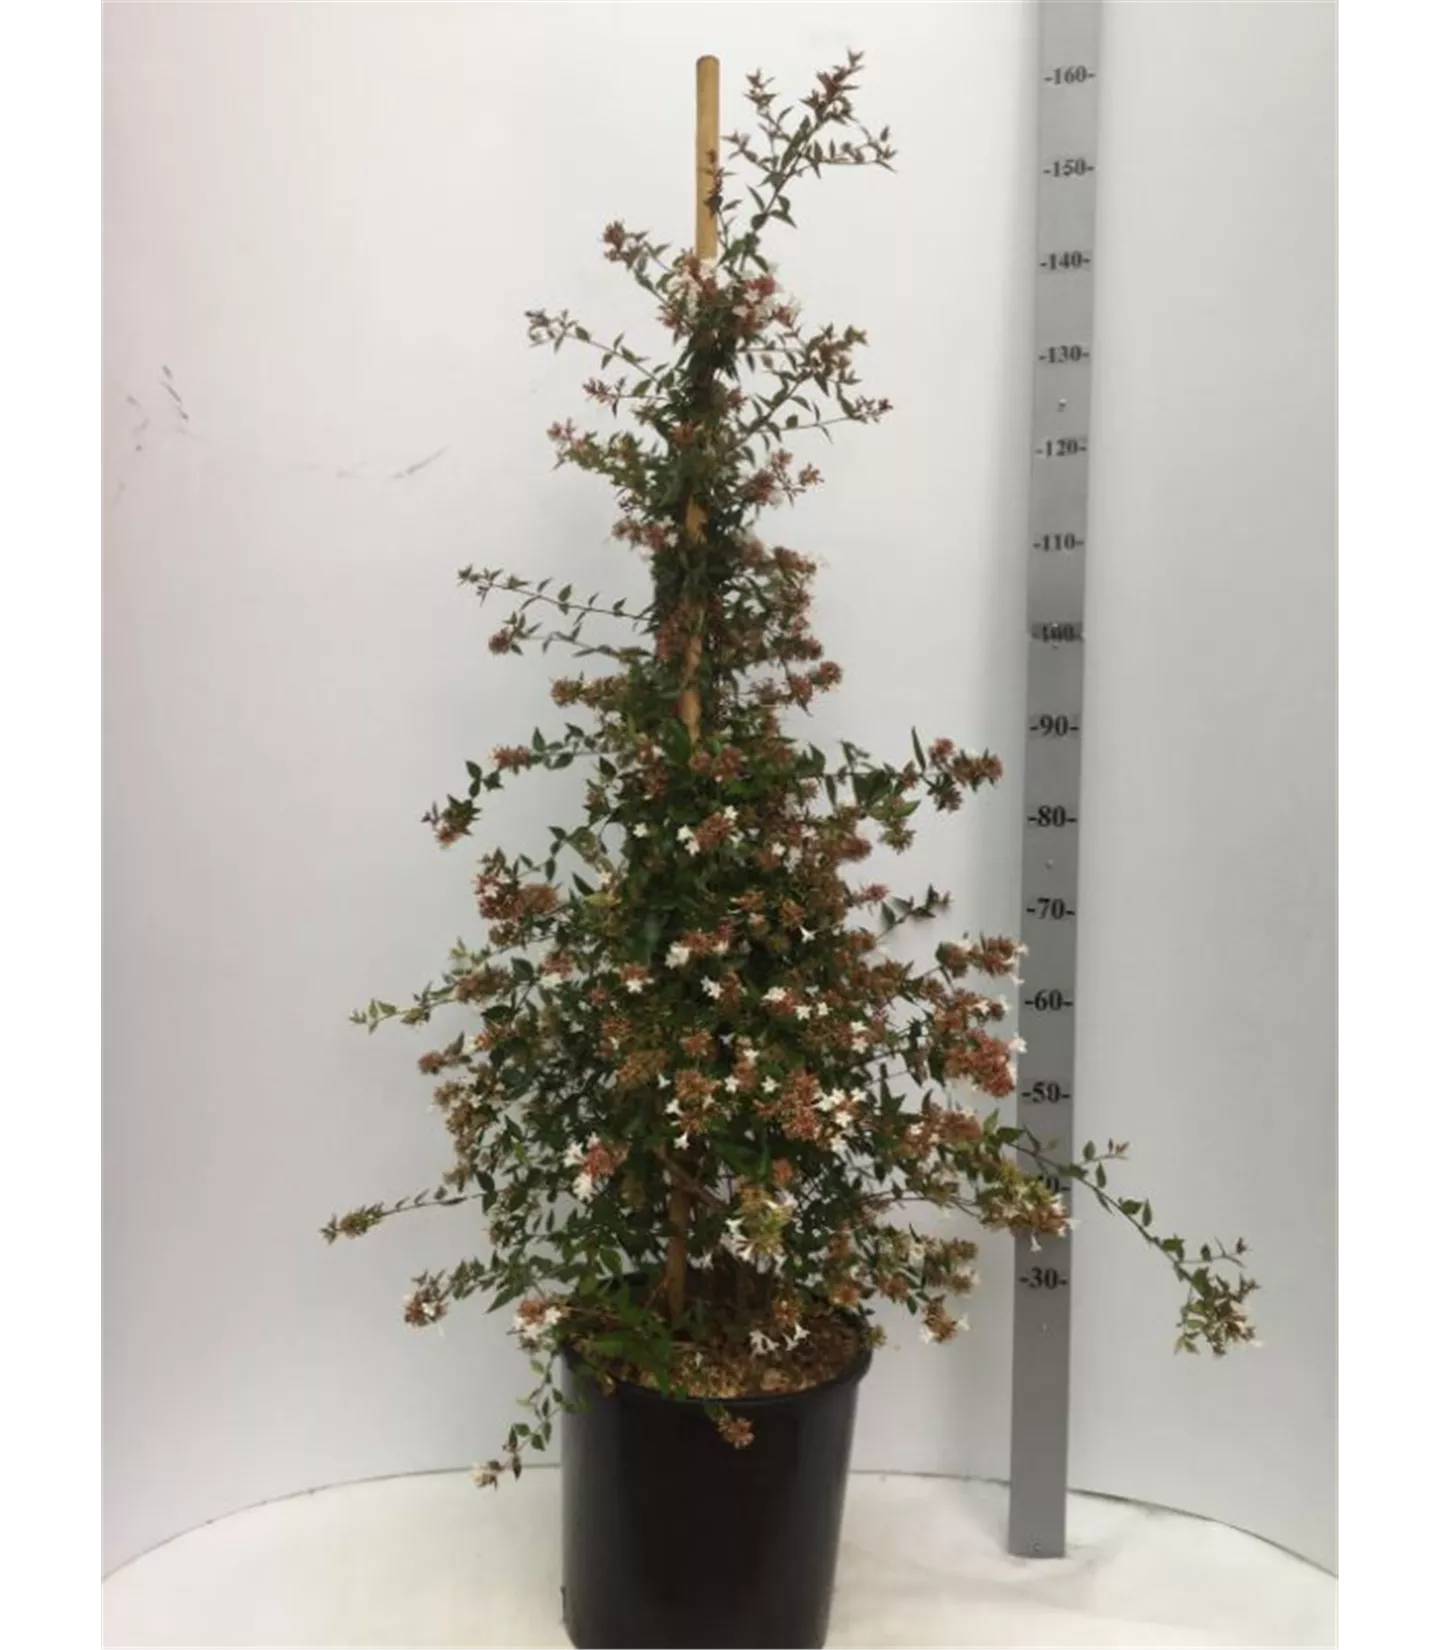 Abelia grandiflora (x)